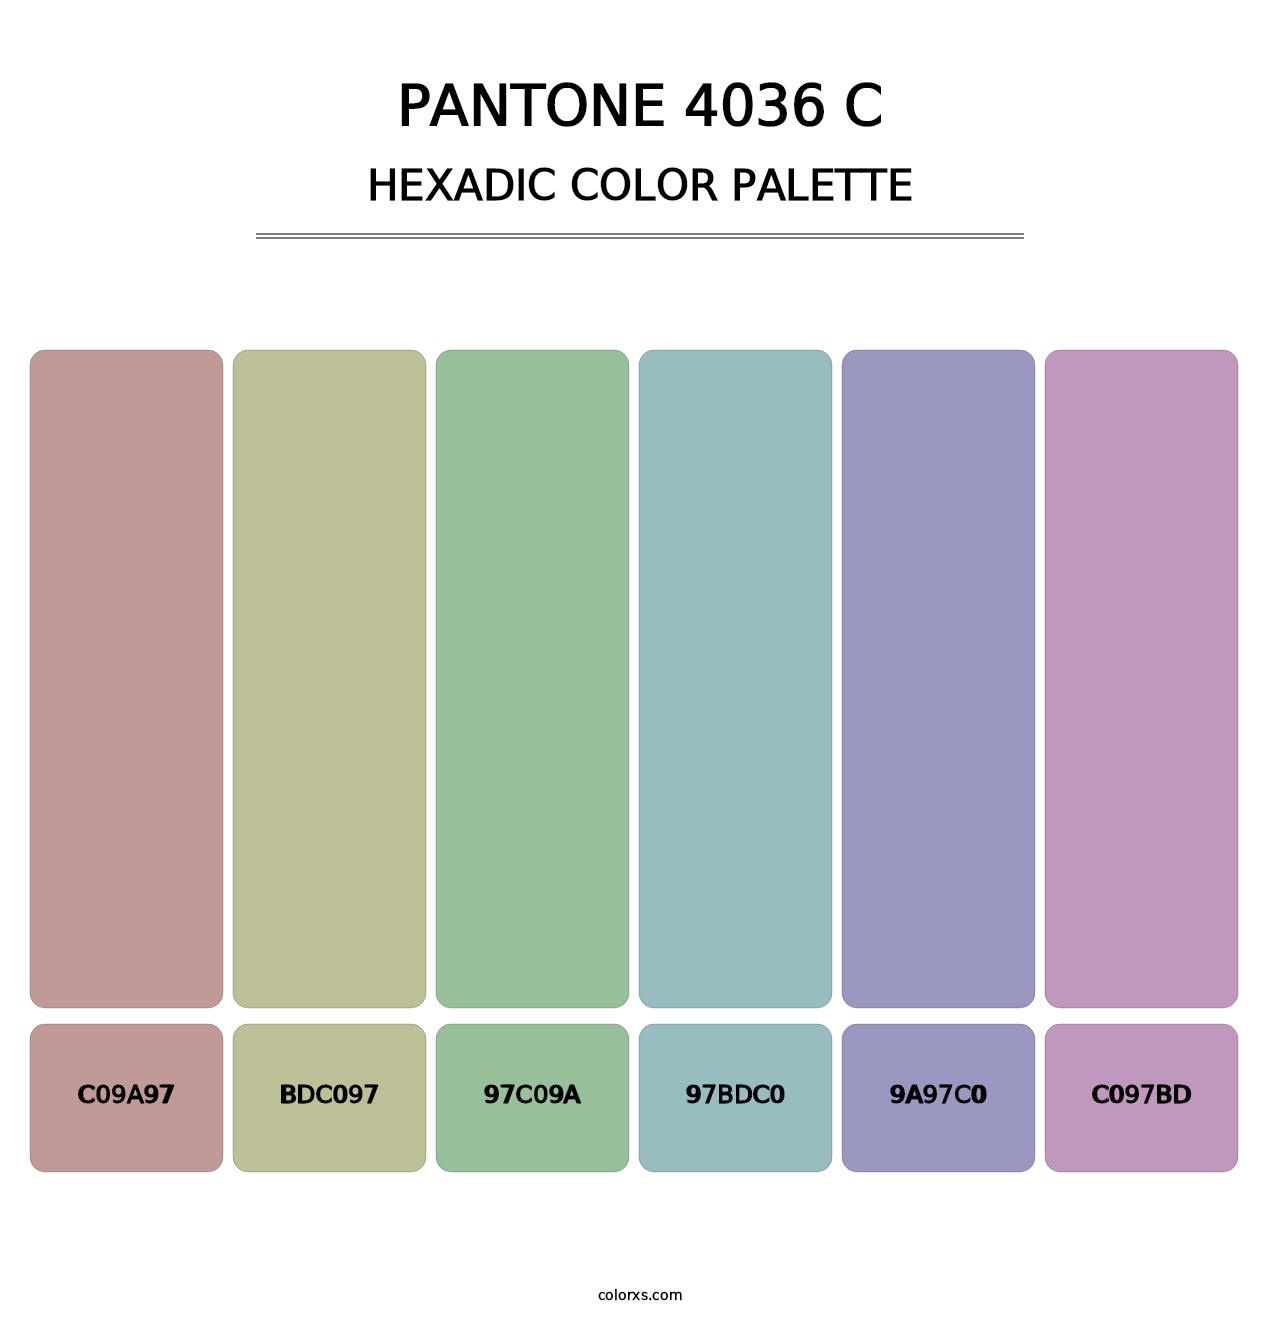 PANTONE 4036 C - Hexadic Color Palette